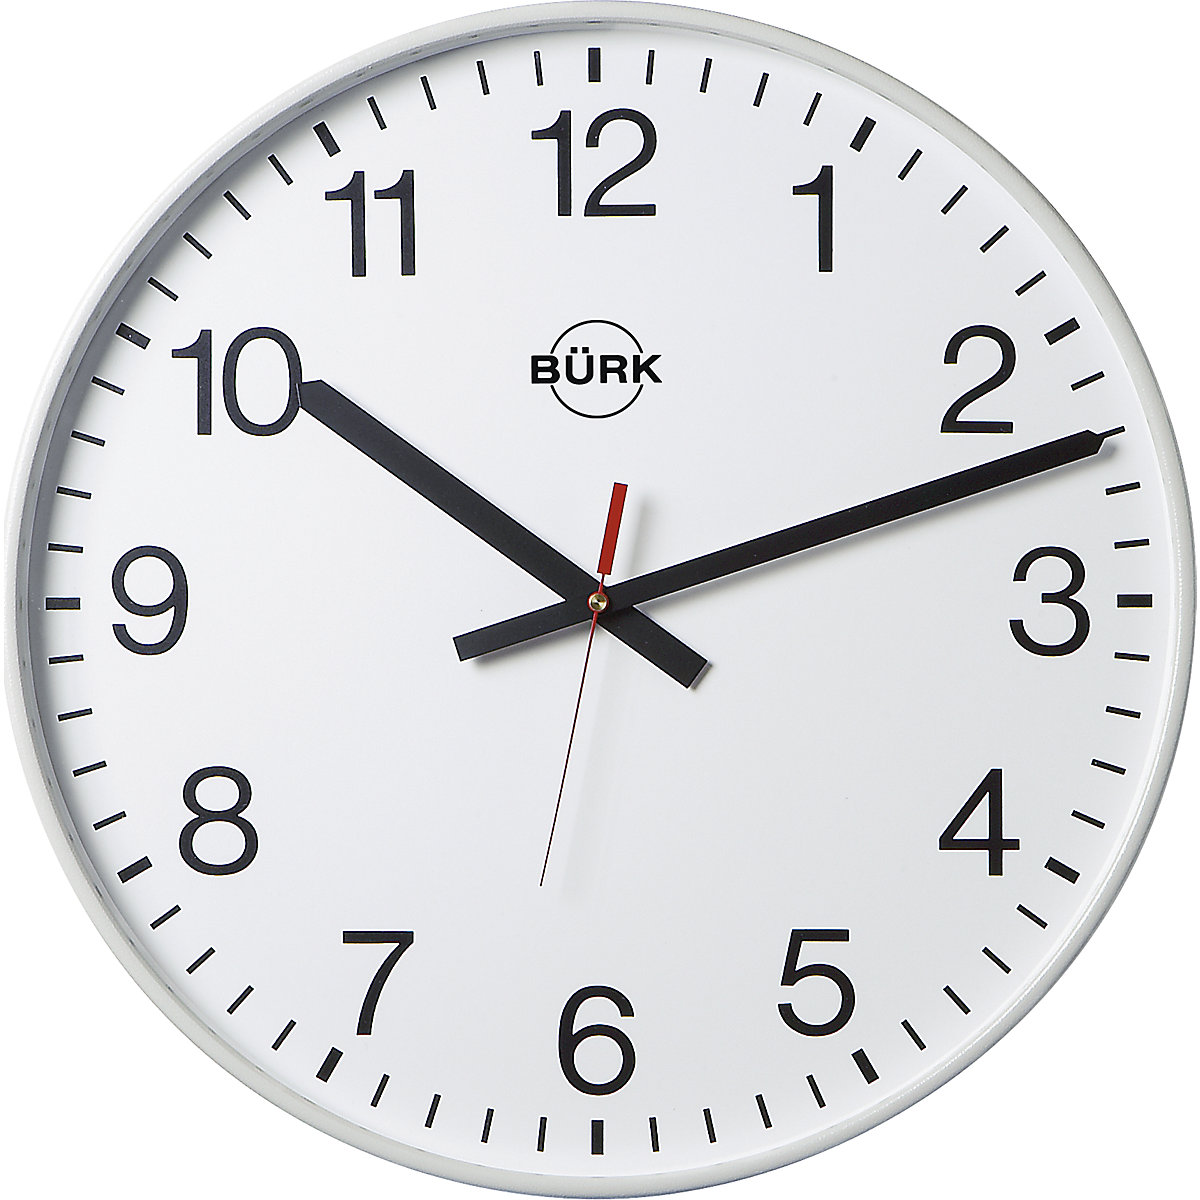 Wall clock - the universal clock, Ø 400 mm